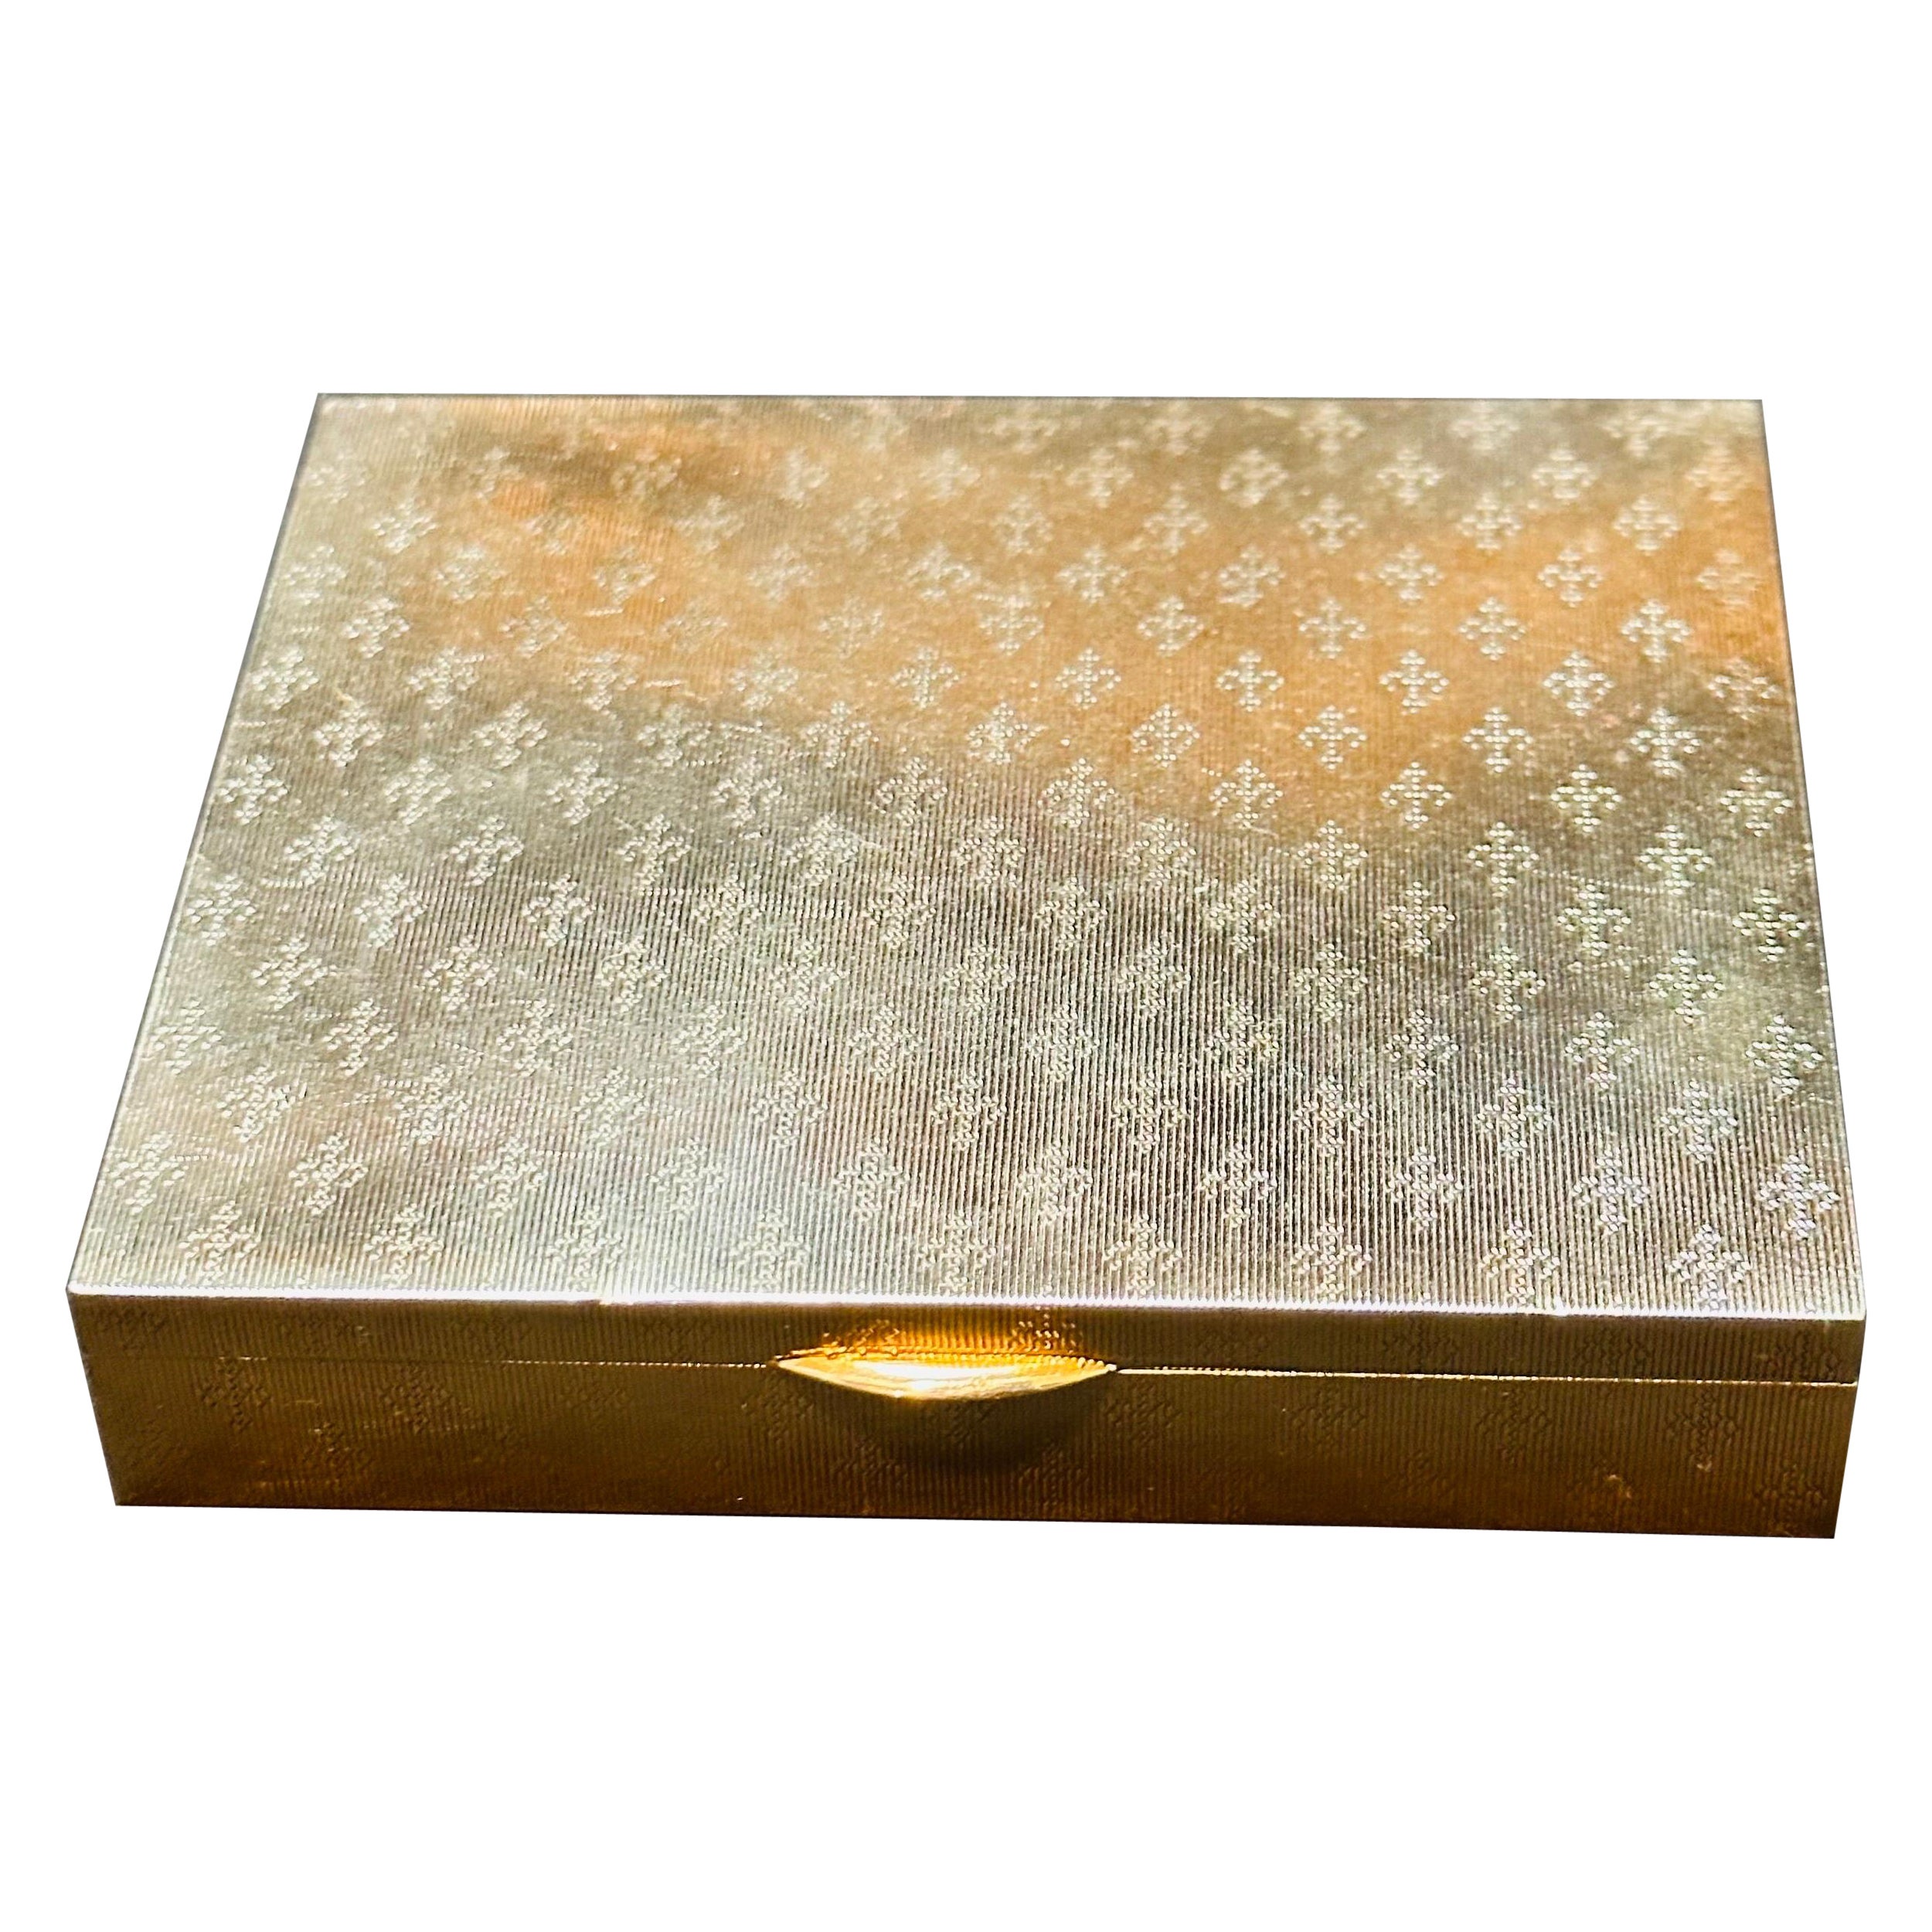 Cartier Gold Compact Powder Box 14 Karat Gold Make-Up Compact 114 Gm For Sale